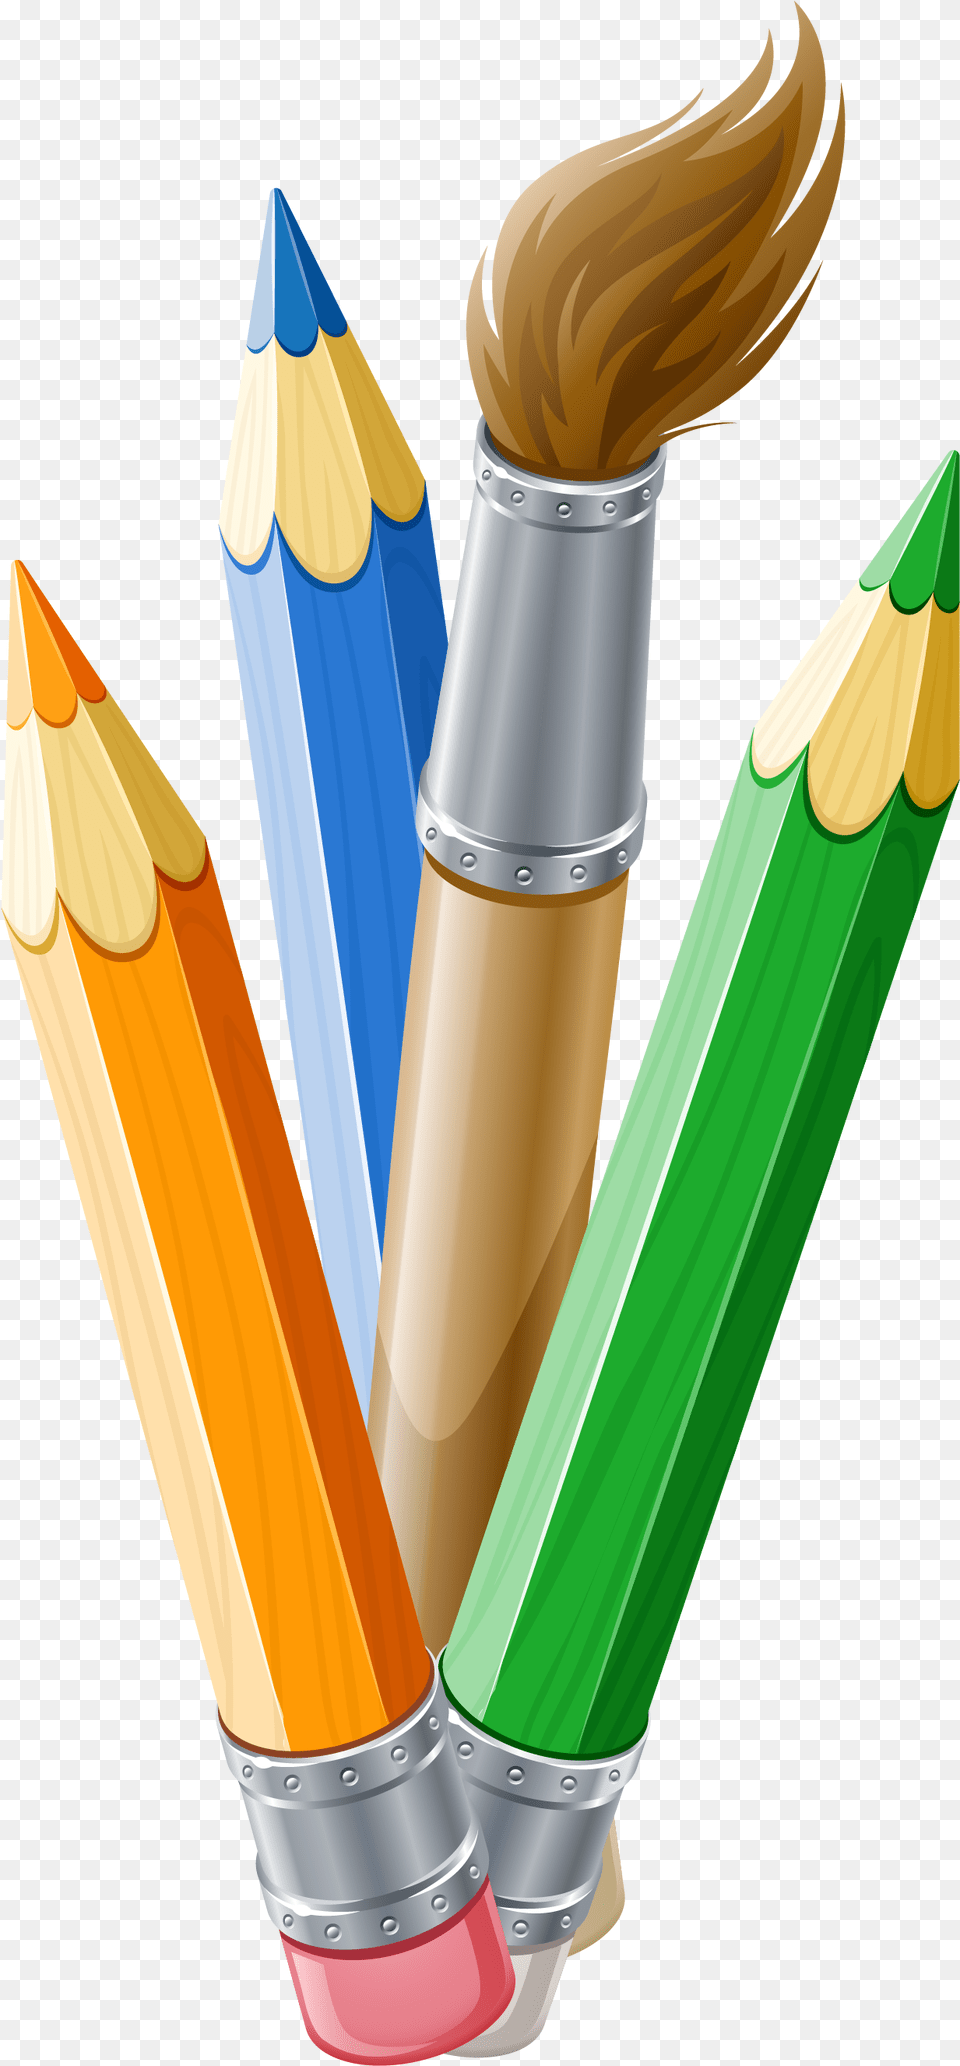 Paint Brush Pen Pencil Related To Paint Brush, Cricket, Cricket Bat, Sport Free Transparent Png